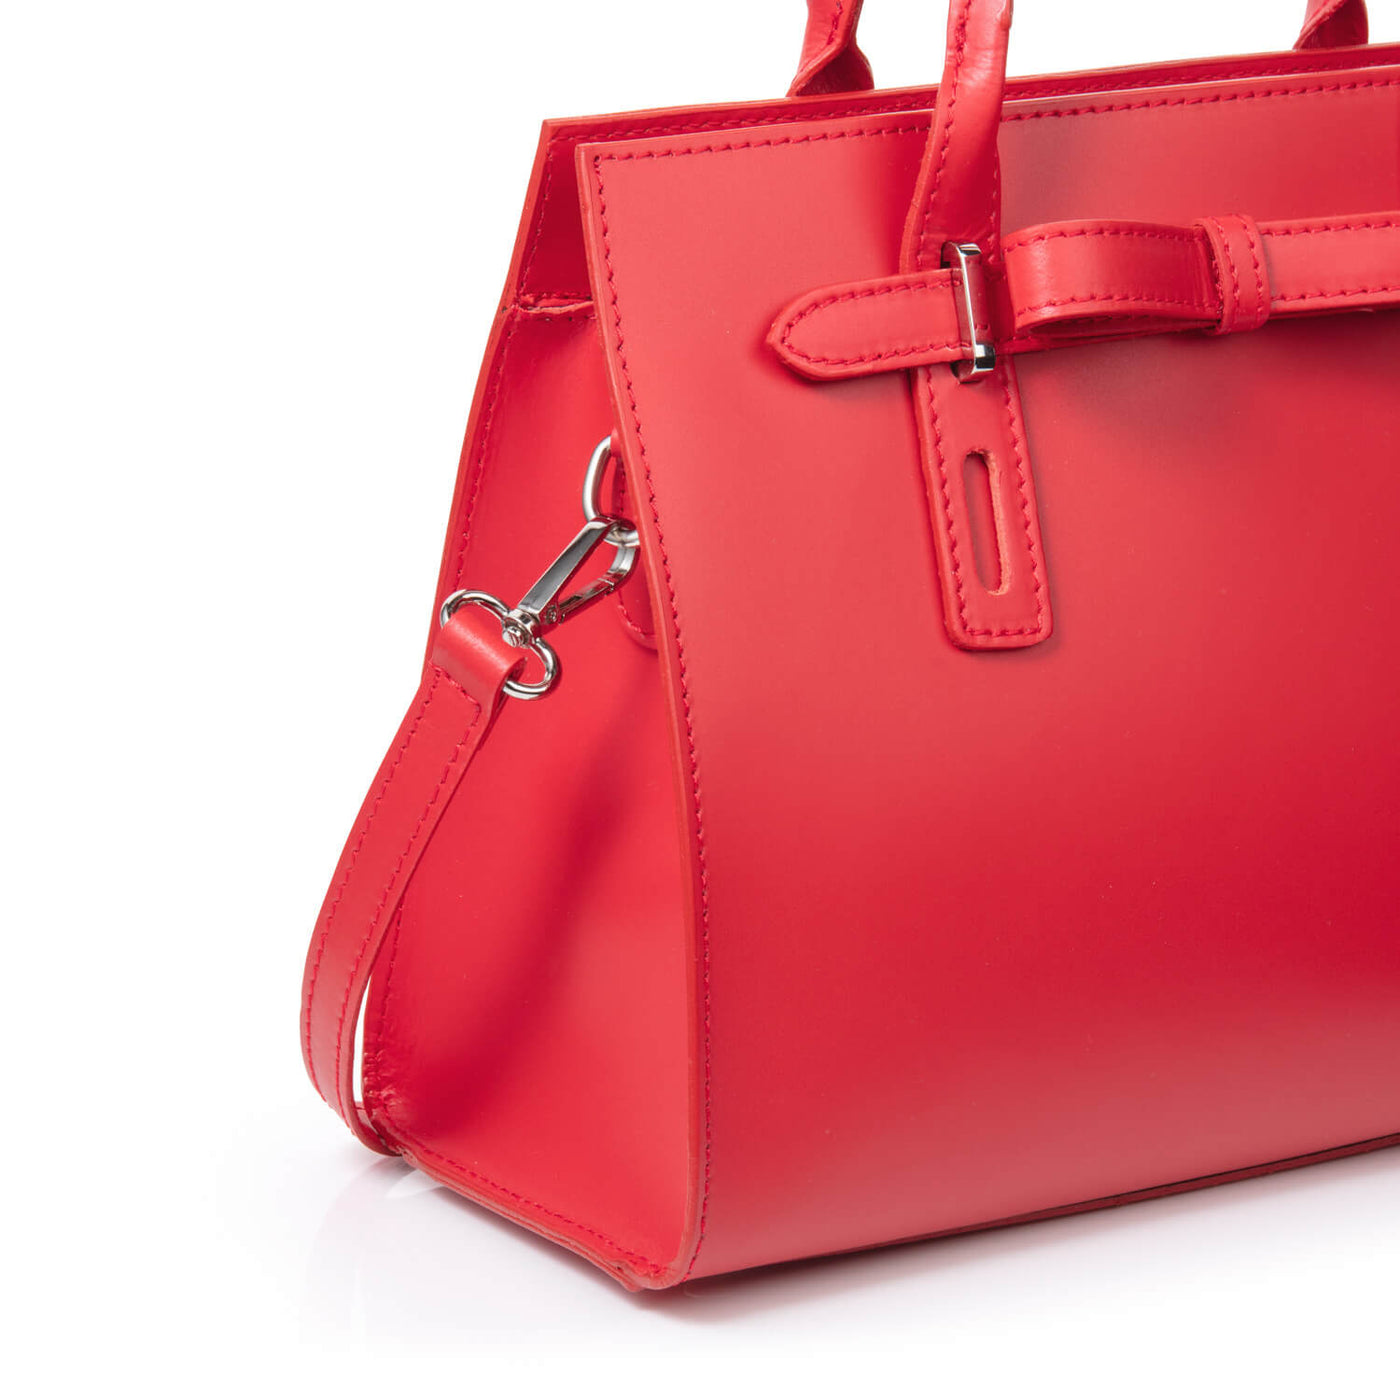 Daniel Steiger Mirabella Red Leather Bag